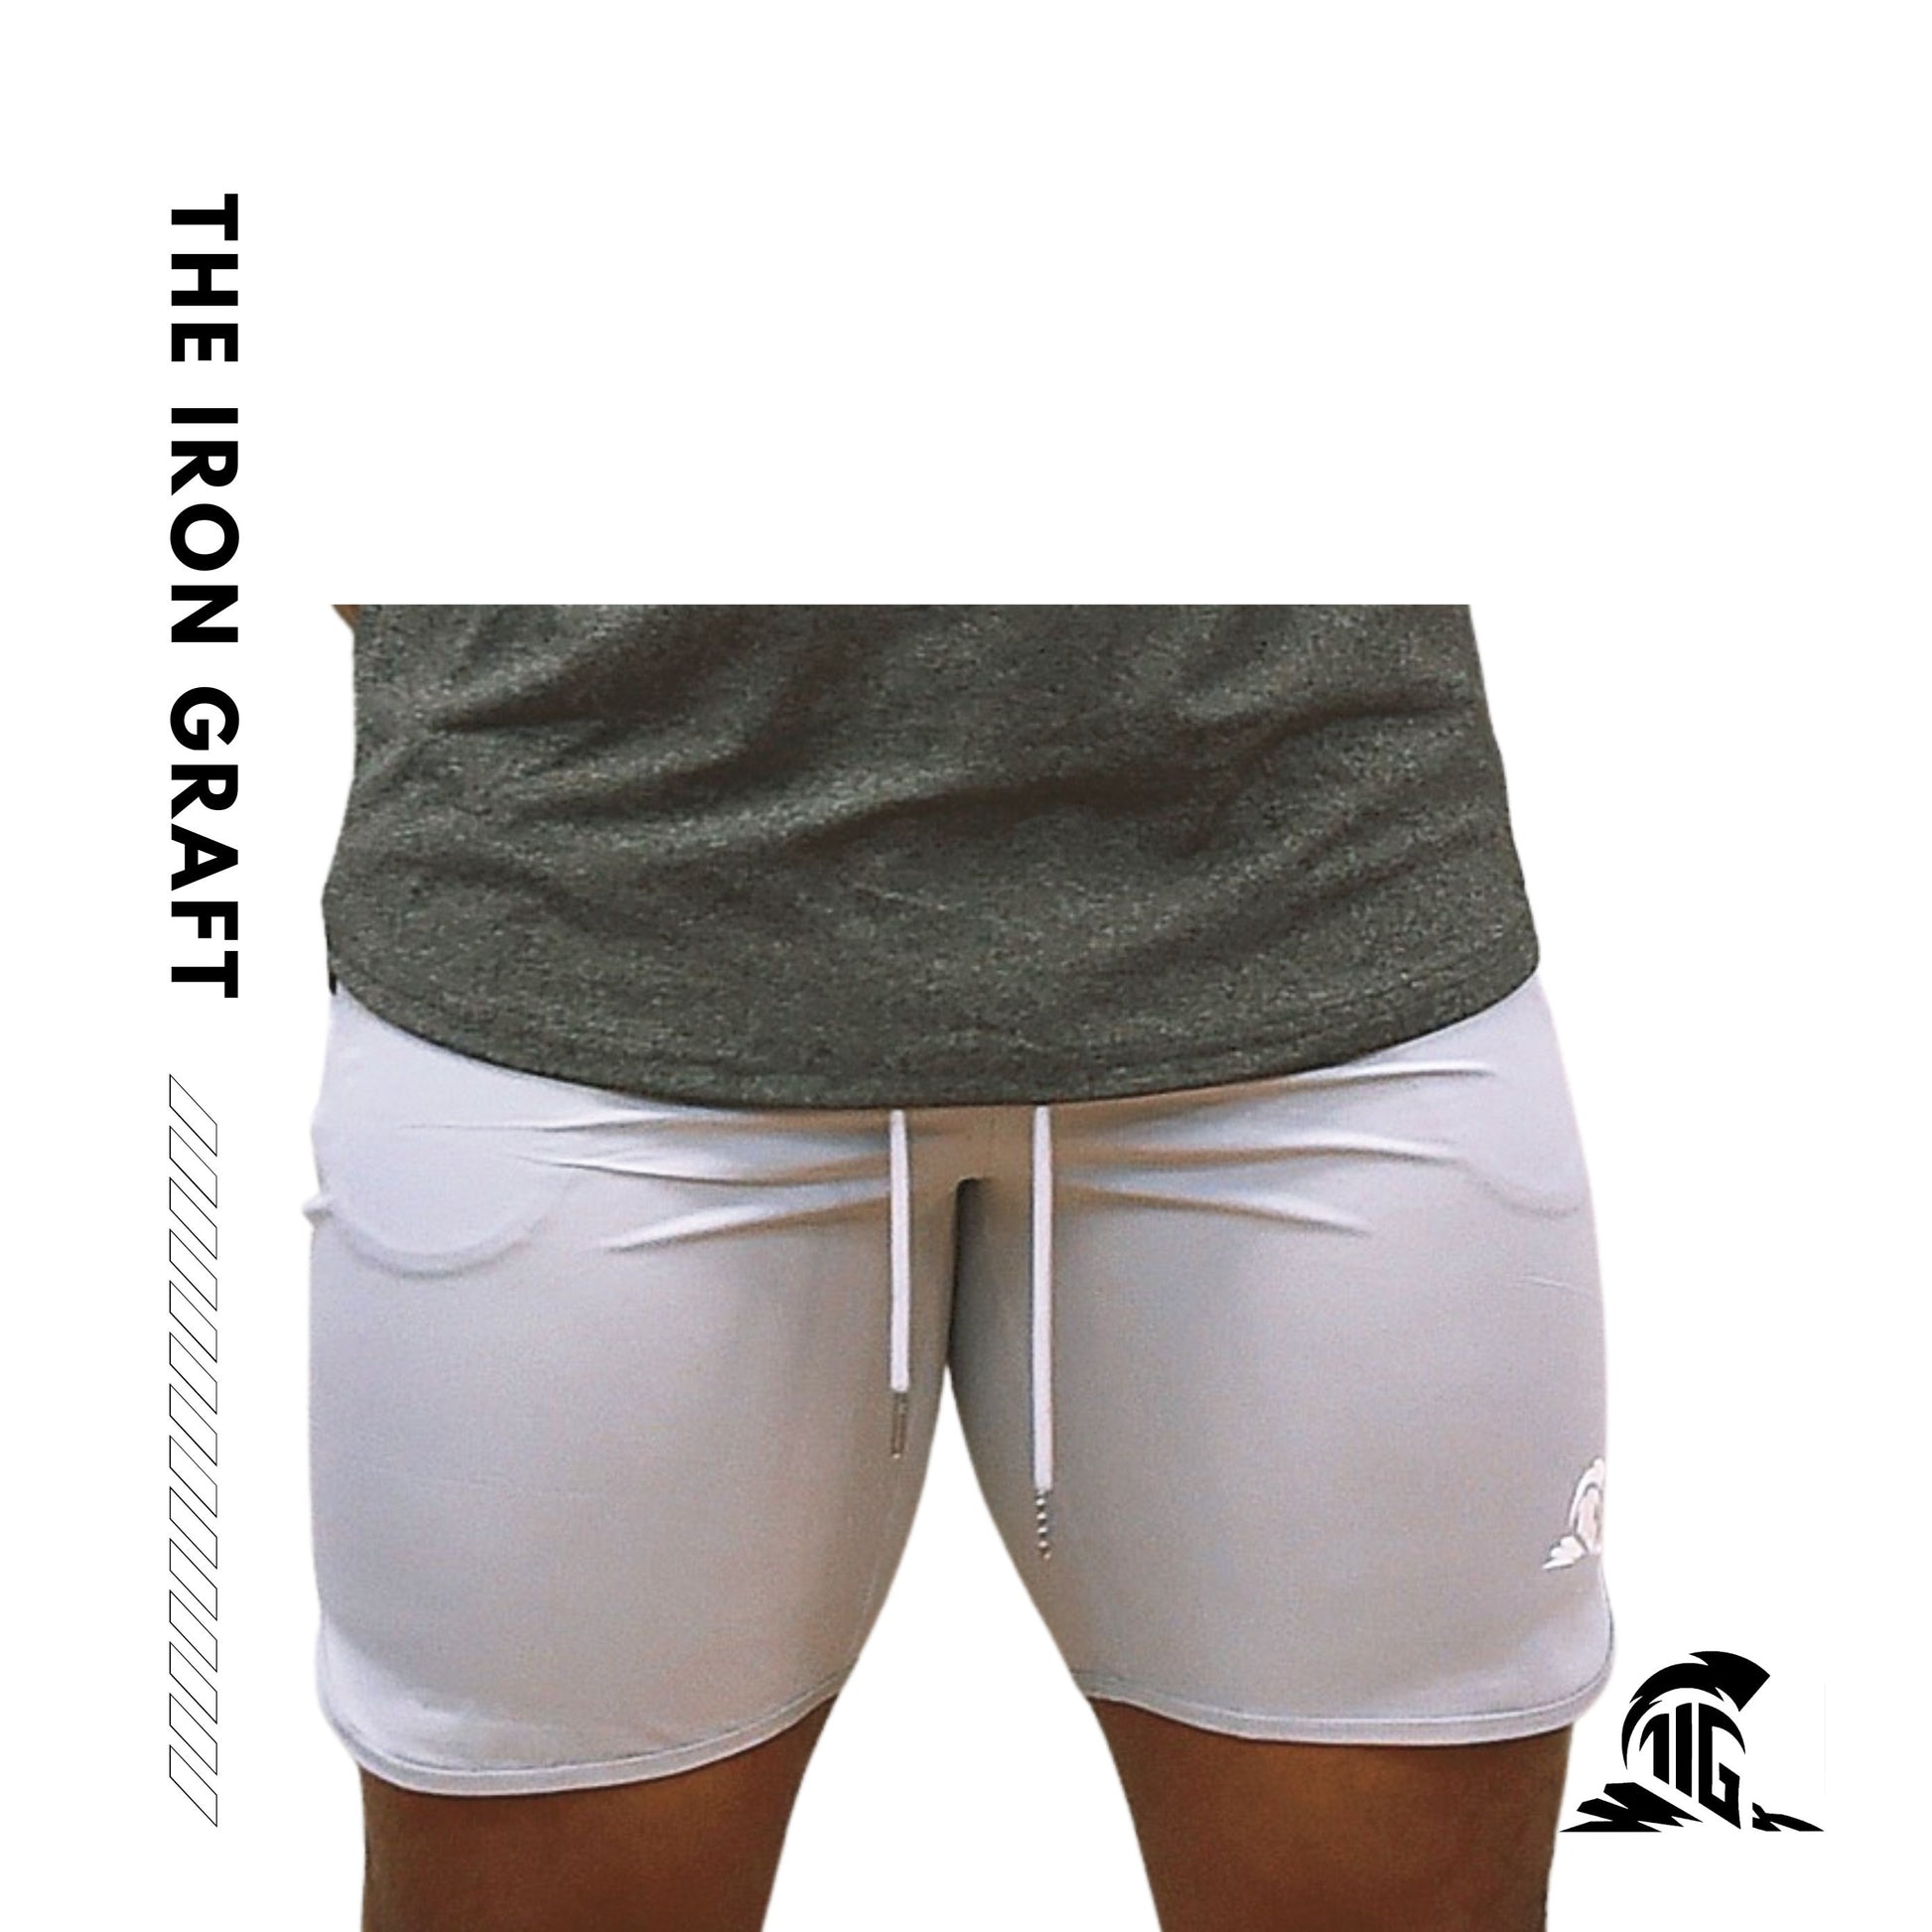 THE IRON GRAFT Stretch Shorts - Light Grey - The Iron Graft